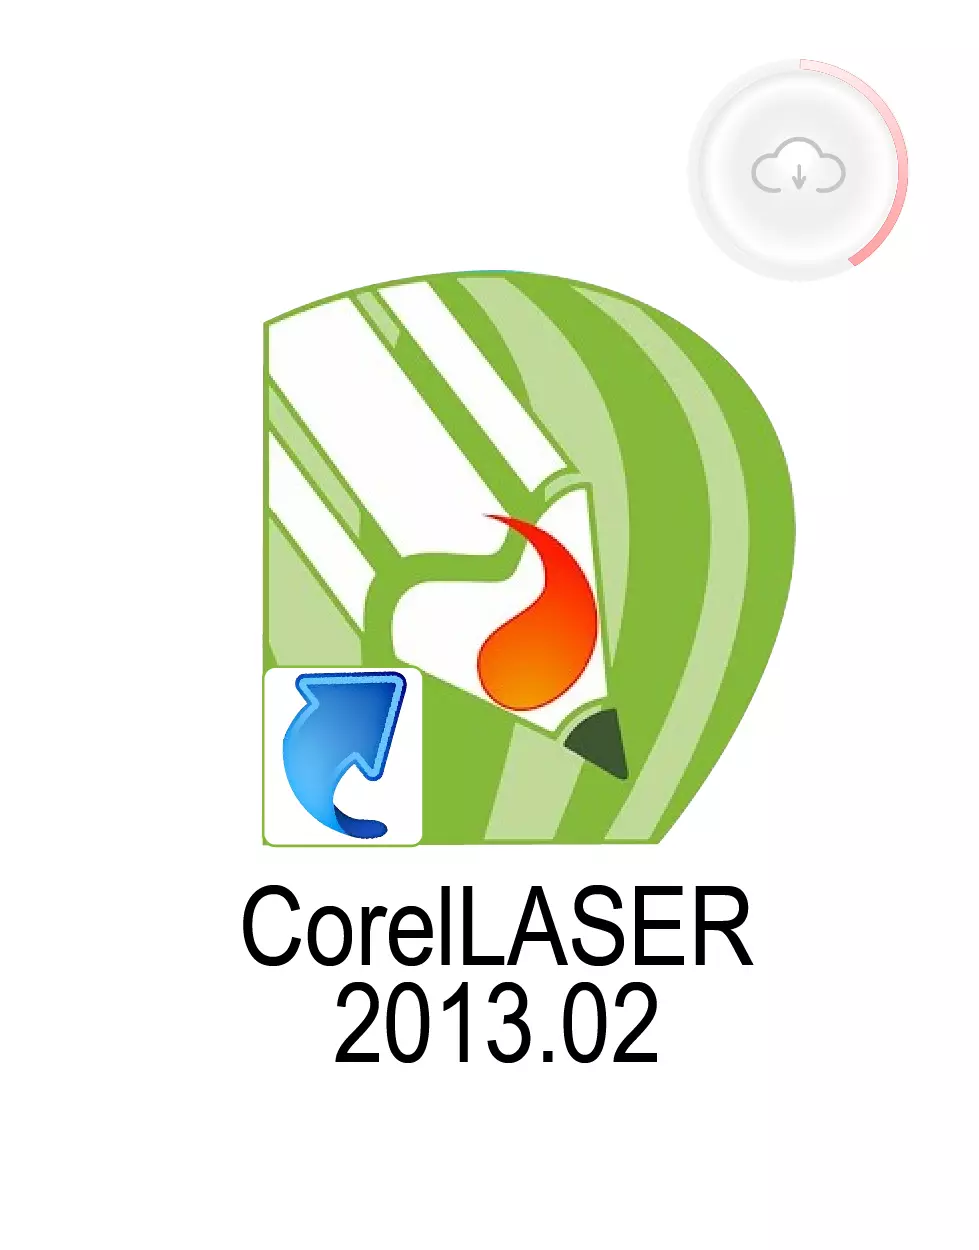 Corel Laser 2013.02